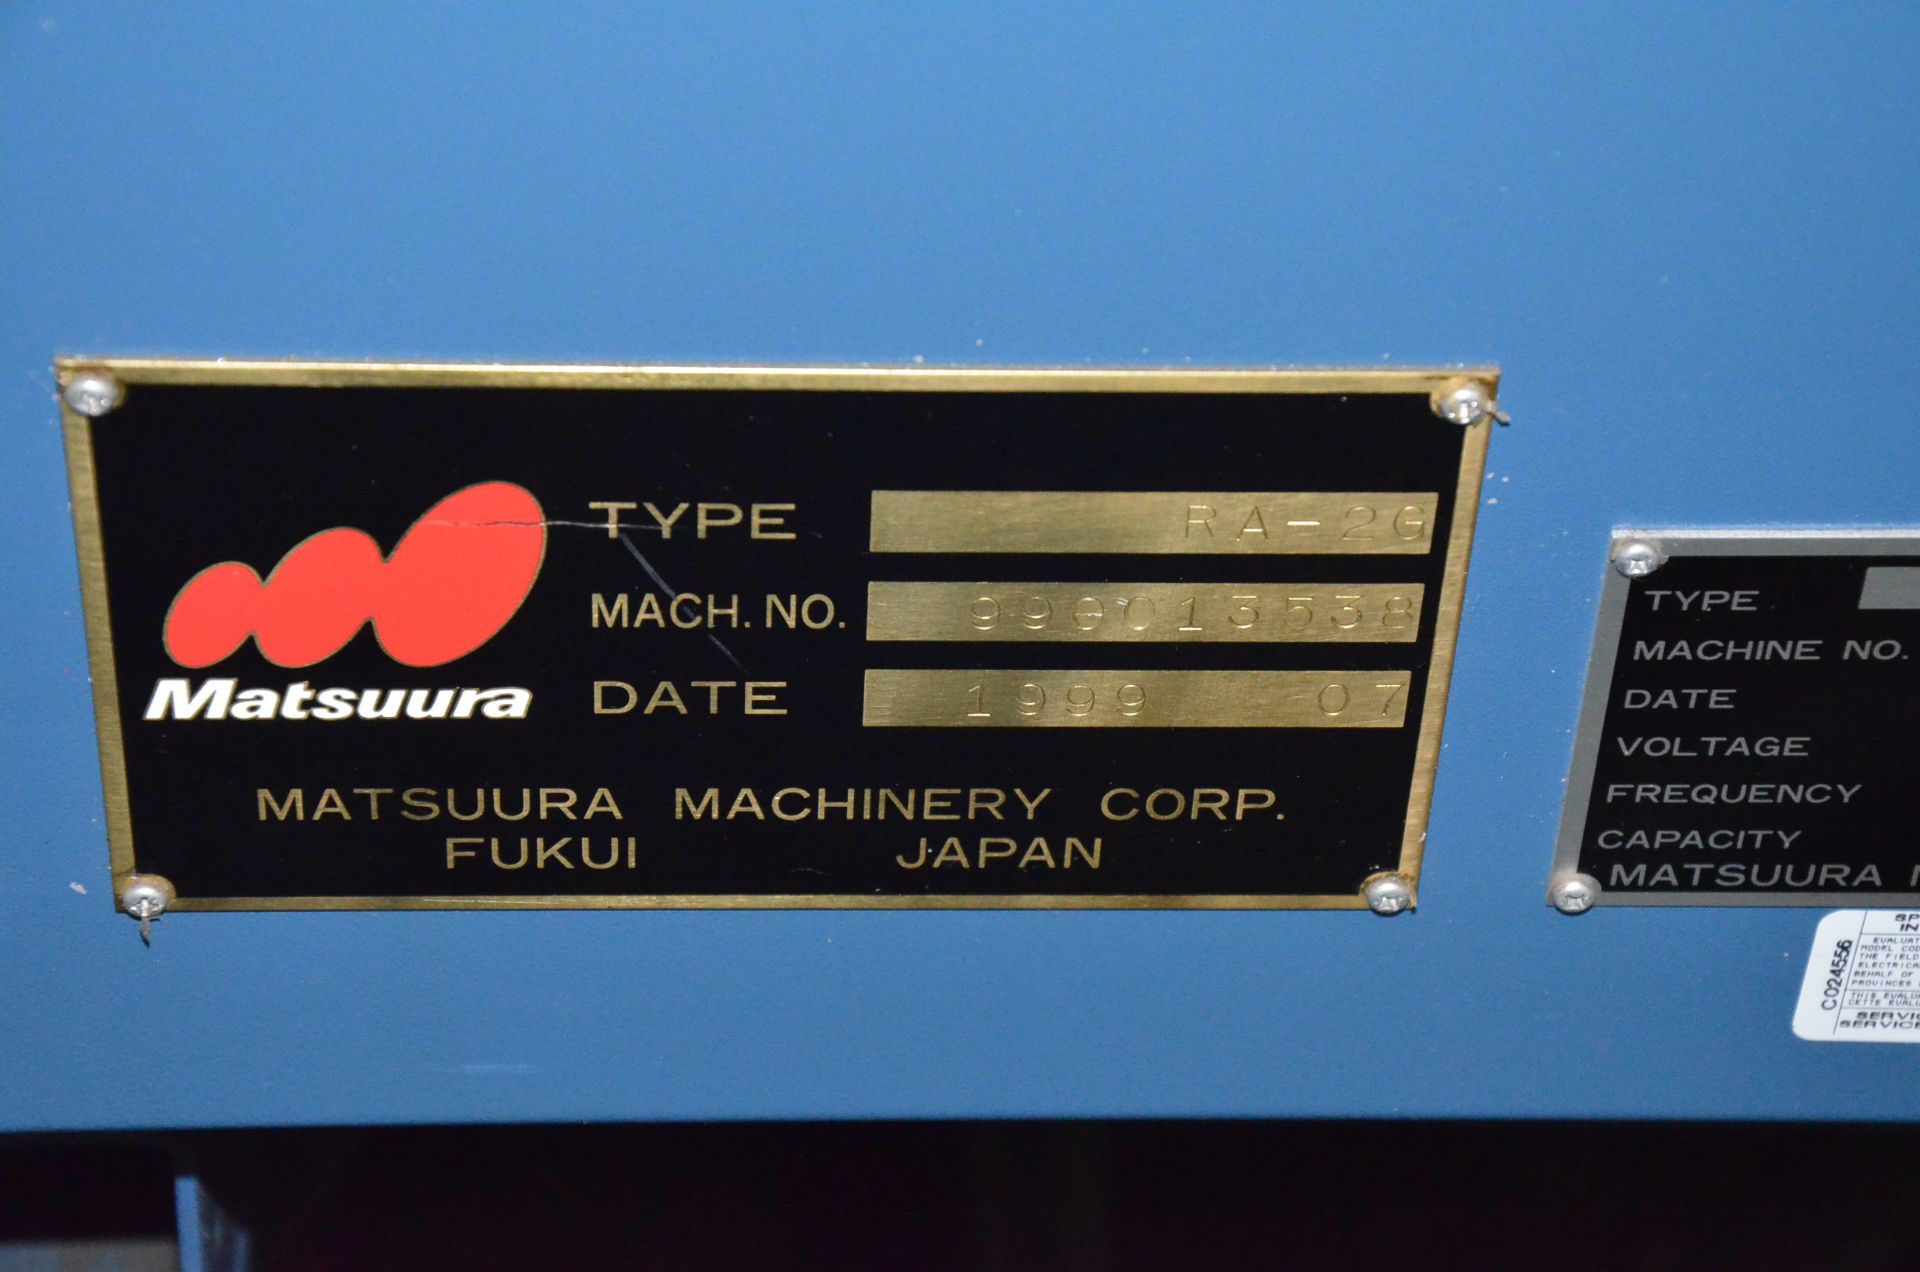 MATSUURA RA-2G CNC TWIN PALLET CNC VERTICAL MACHINING CENTER WITH MATSUURA YASNAC J300 CNC - Image 11 of 19